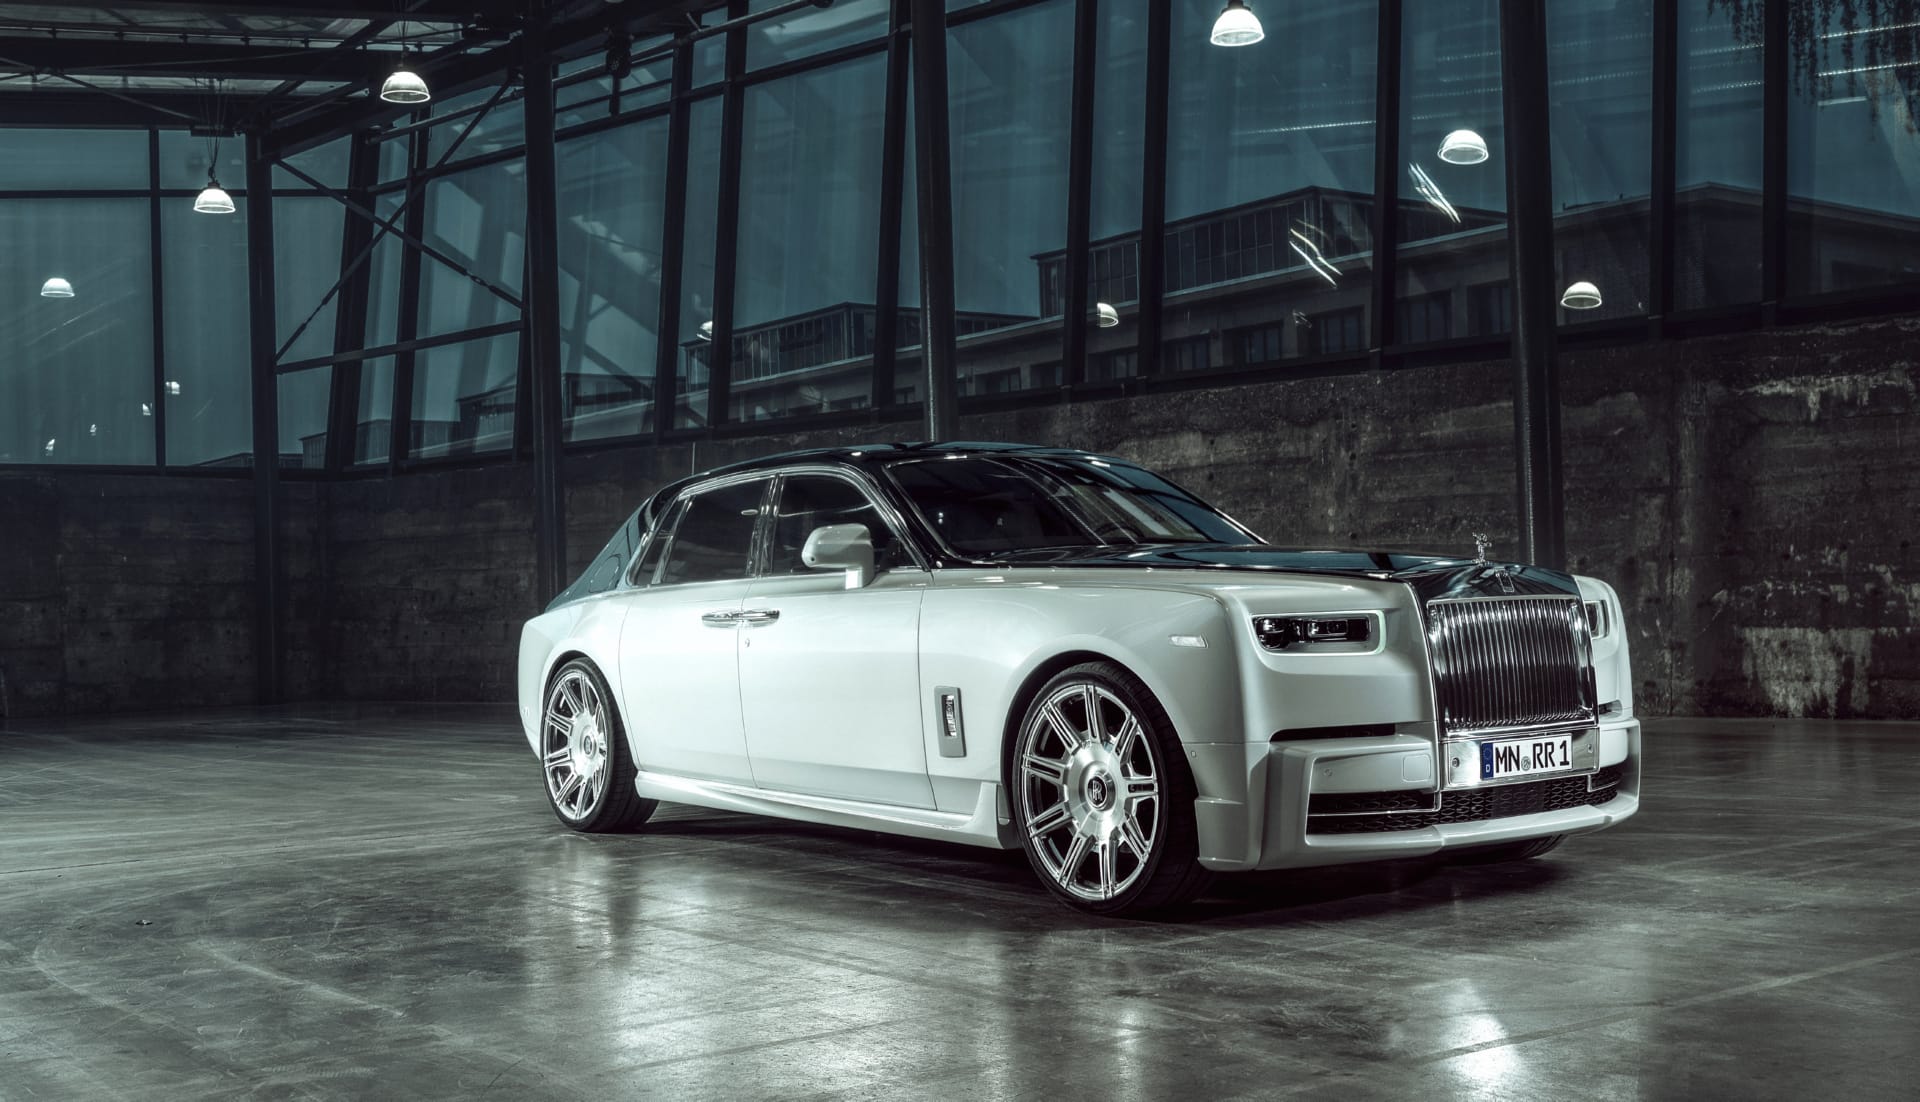 Rolls-Royce Phantom at 1280 x 960 size wallpapers HD quality